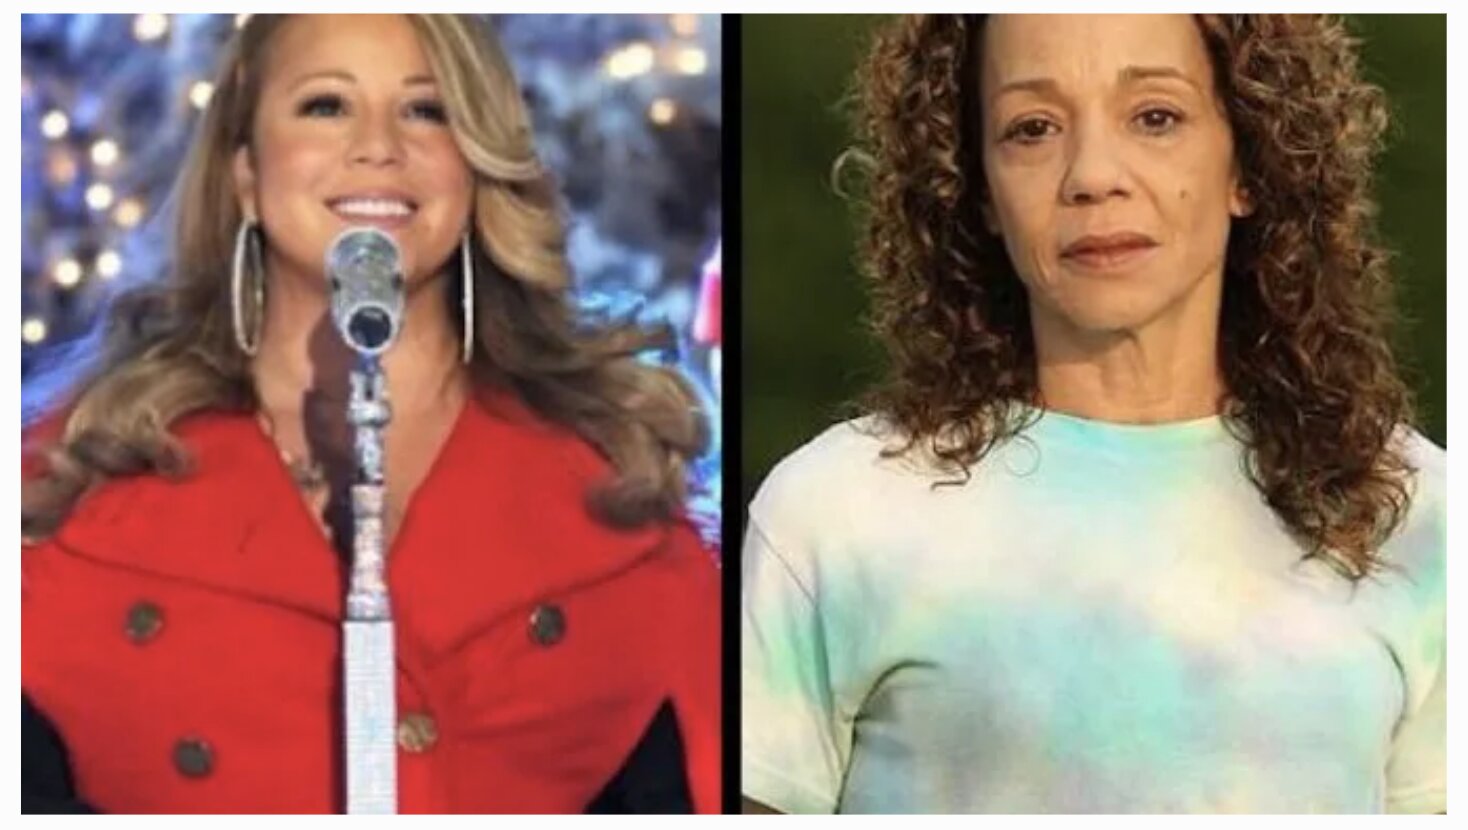 “ALL I WANT FOR CHRISTMAS”: Mariah Carey Member Of Satanic Pedophile Cult, Says Sister